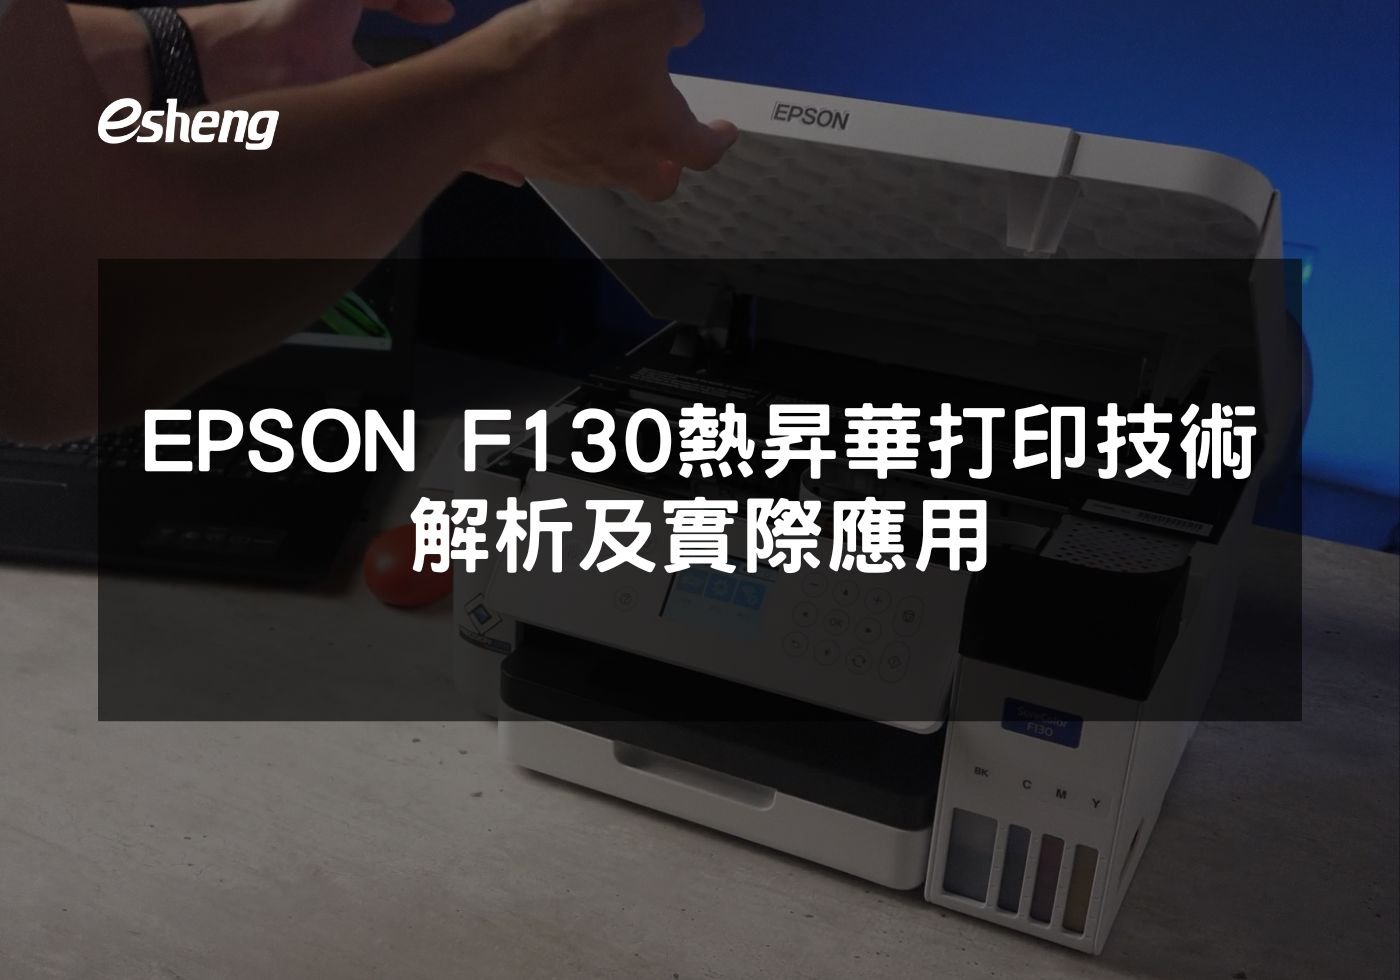 EPSON F130 熱昇華打印技術解析及實際應用